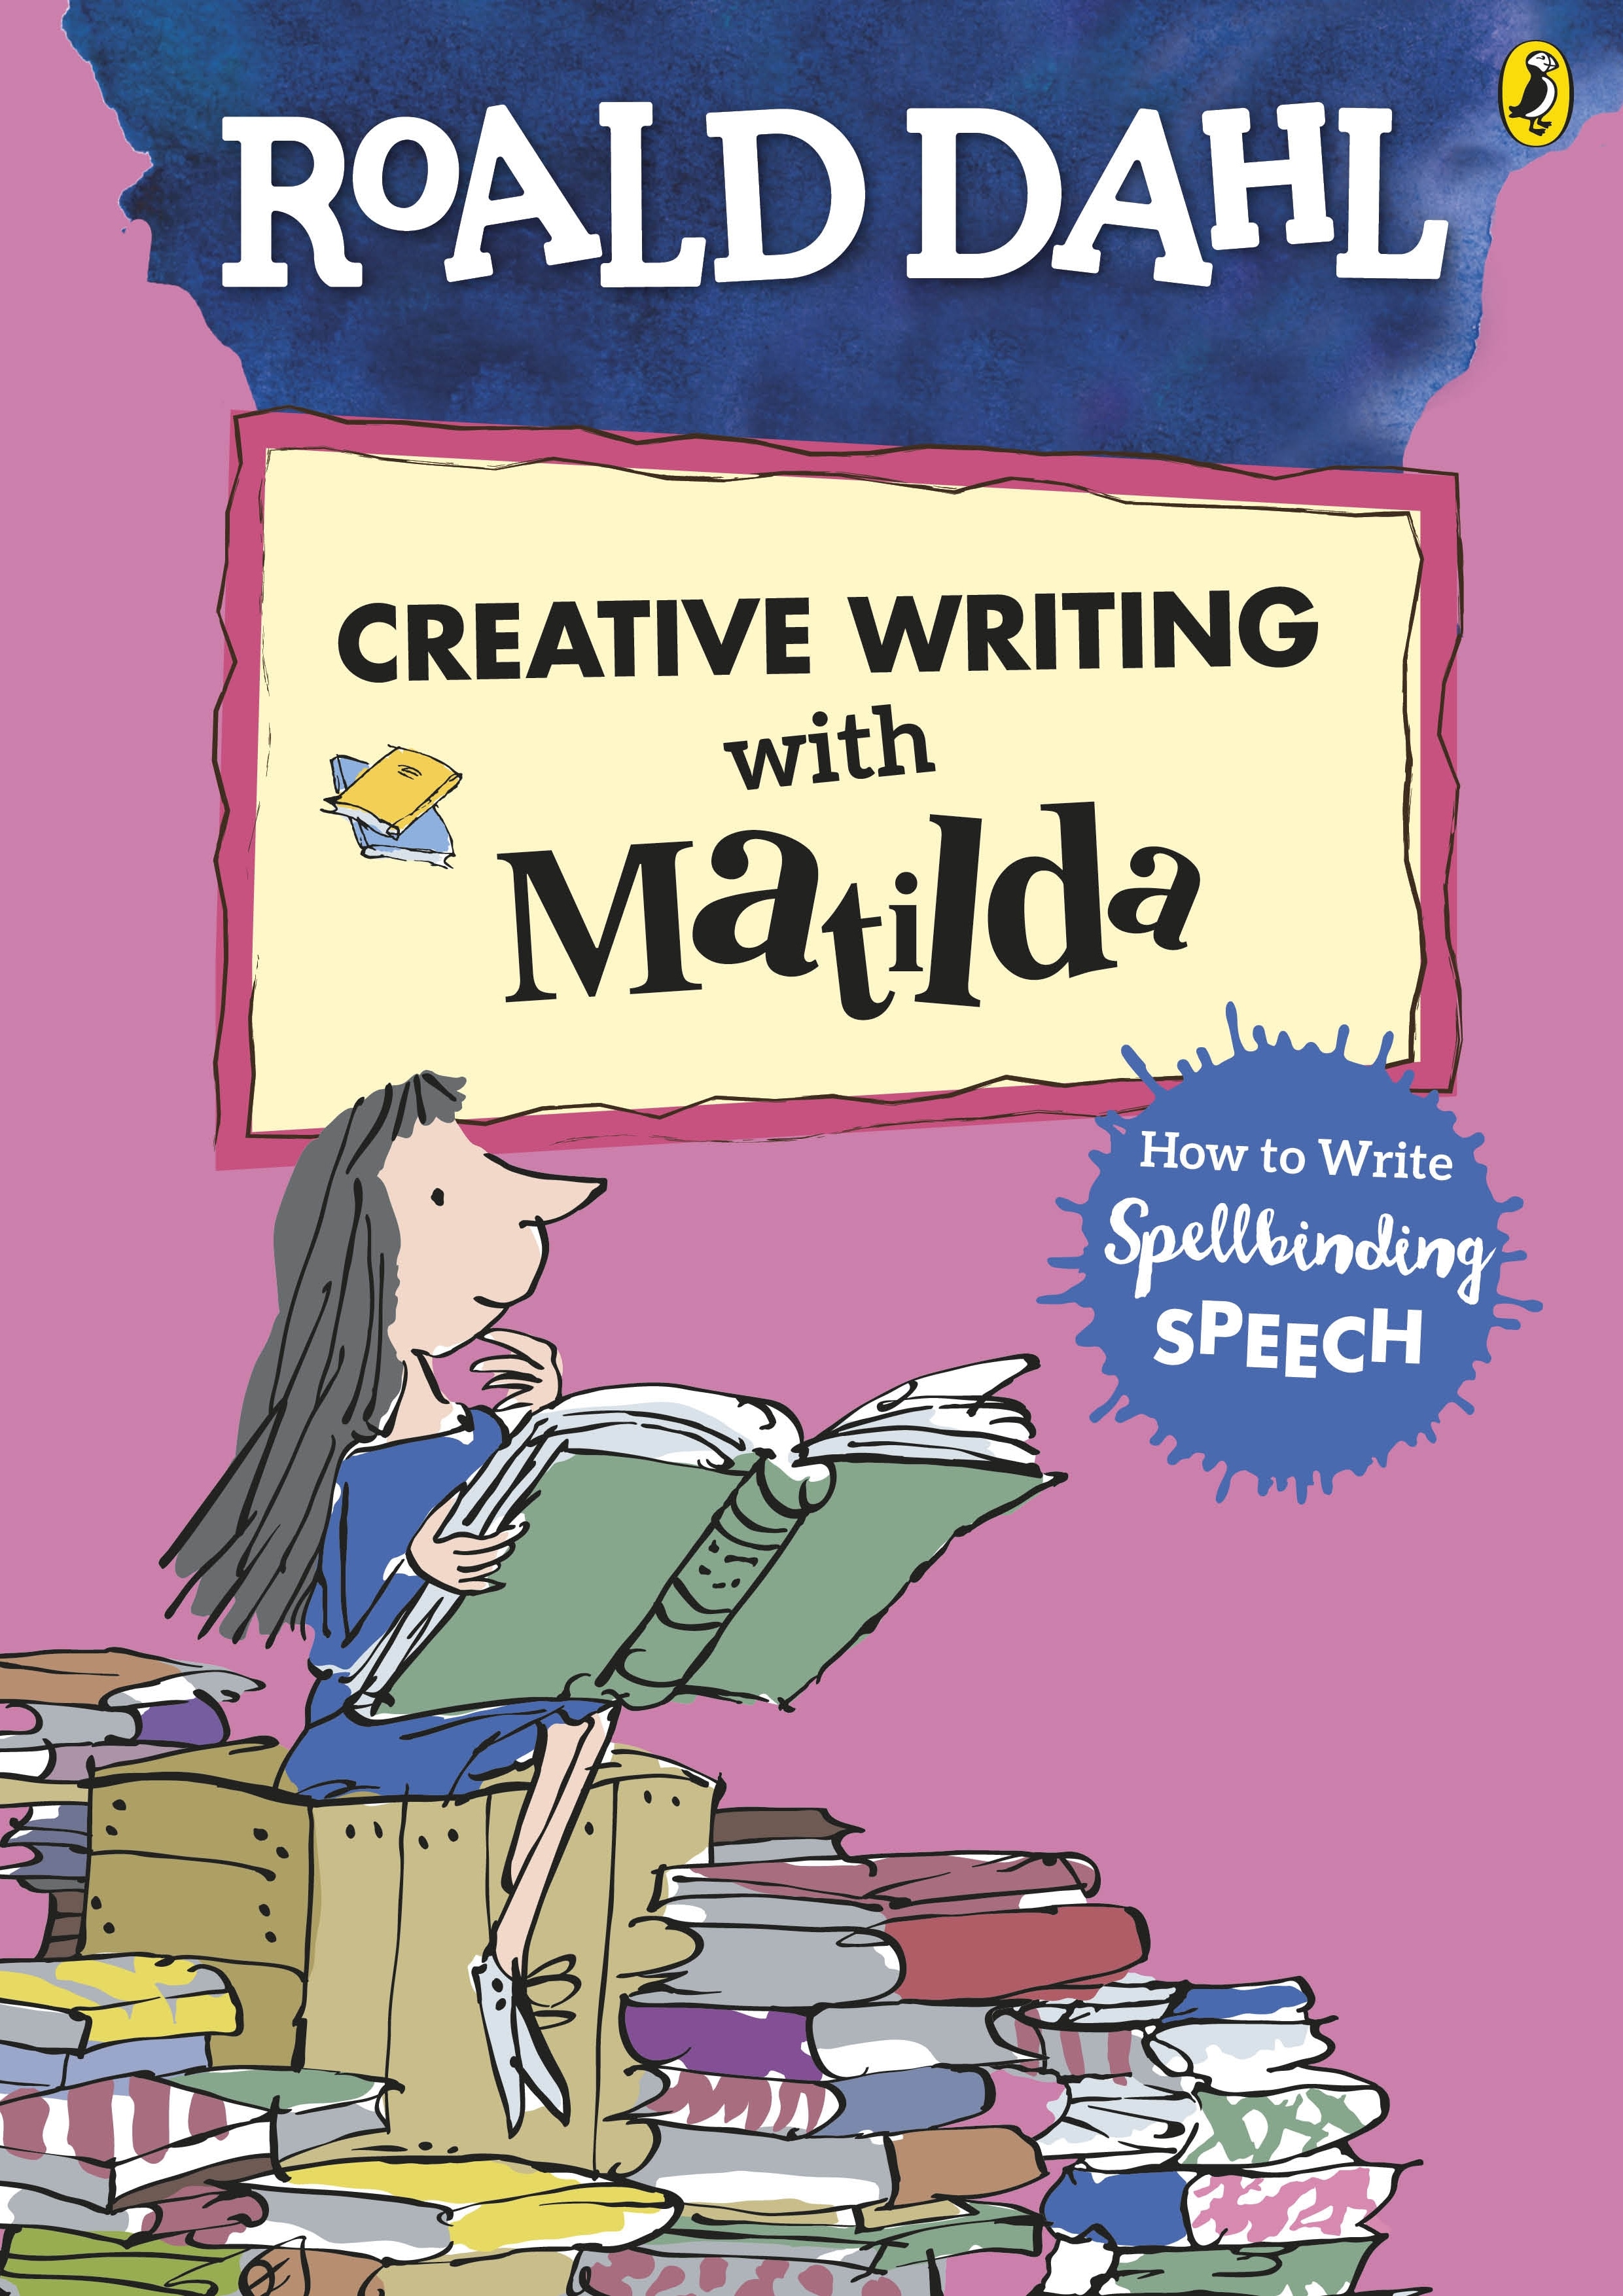 Book “Roald Dahl's Creative Writing with Matilda: How to Write Spellbinding Speech” by Roald Dahl — January 24, 2019